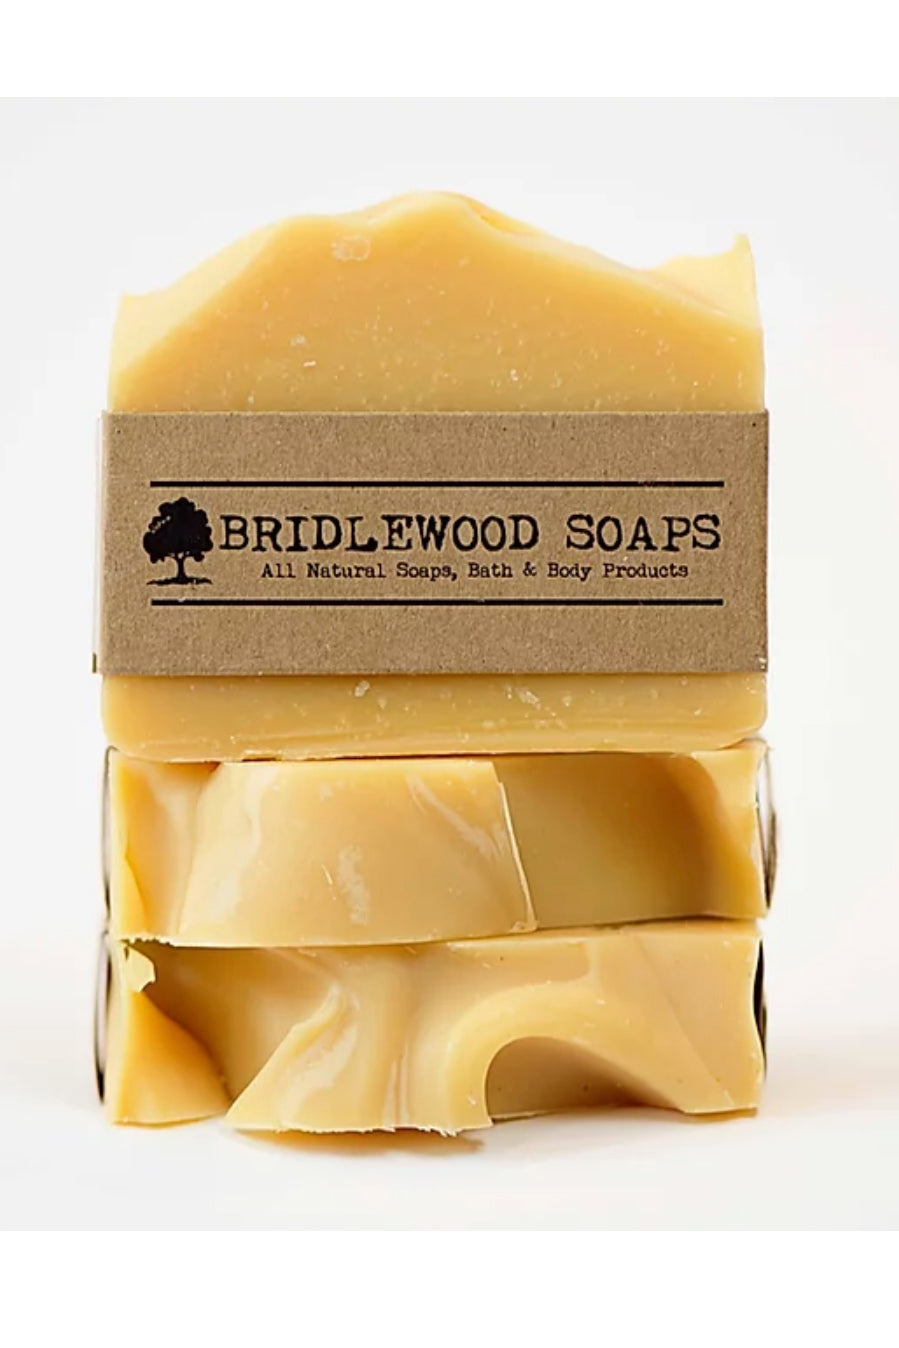 BRIDLEWOOD SOAPS Lemongrass Carrot Soap Bar (stacked)